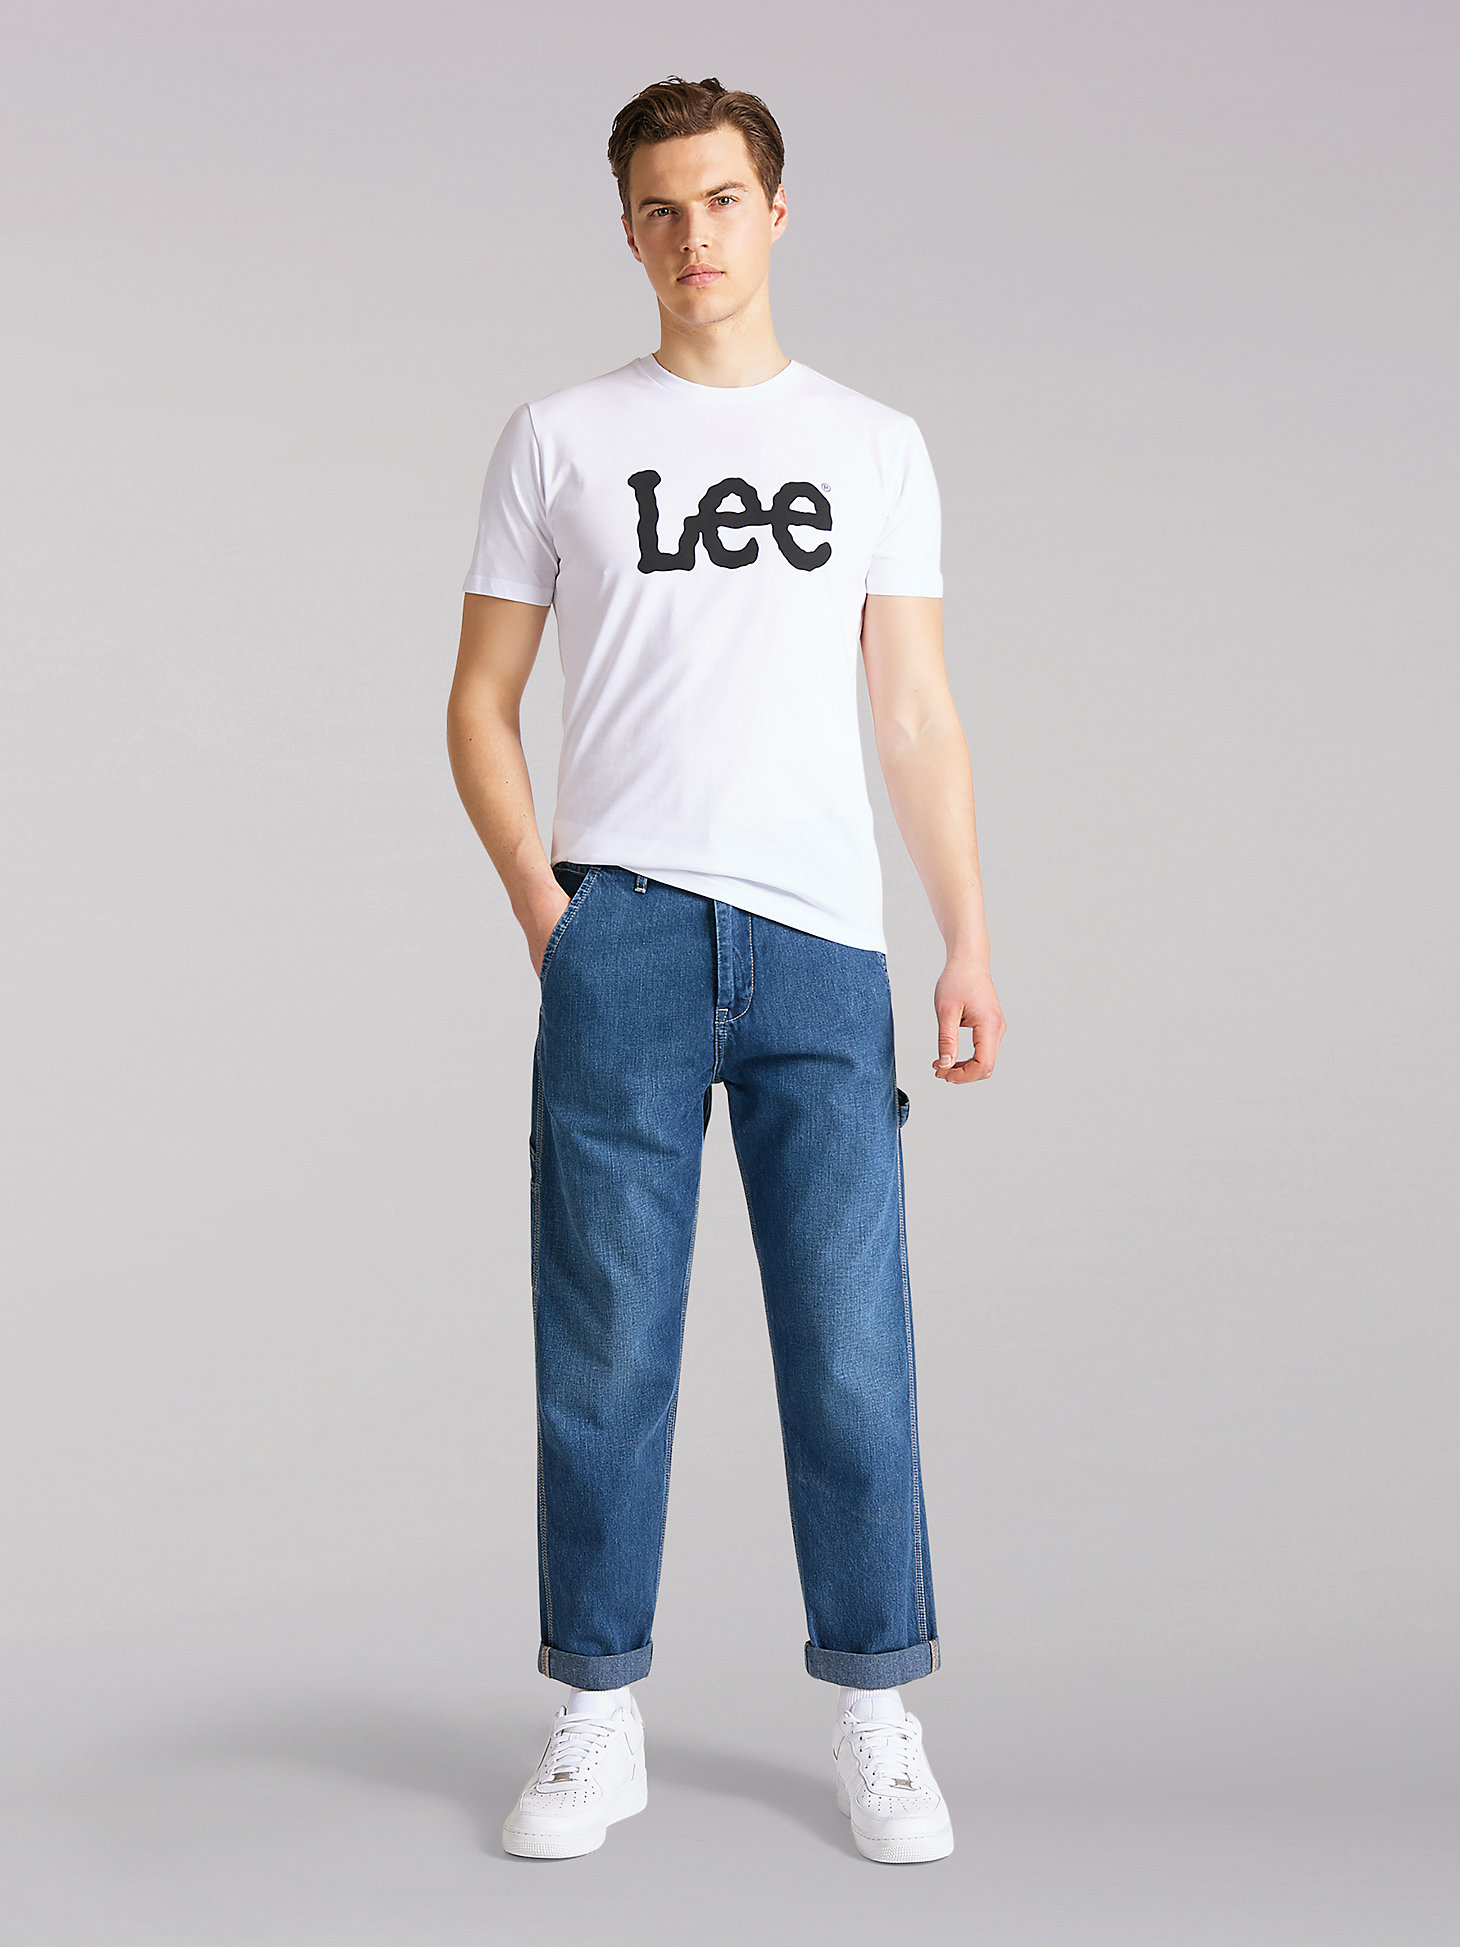 Men’s Lee European Collection Wobbly Logo Tee in White alternative view 4